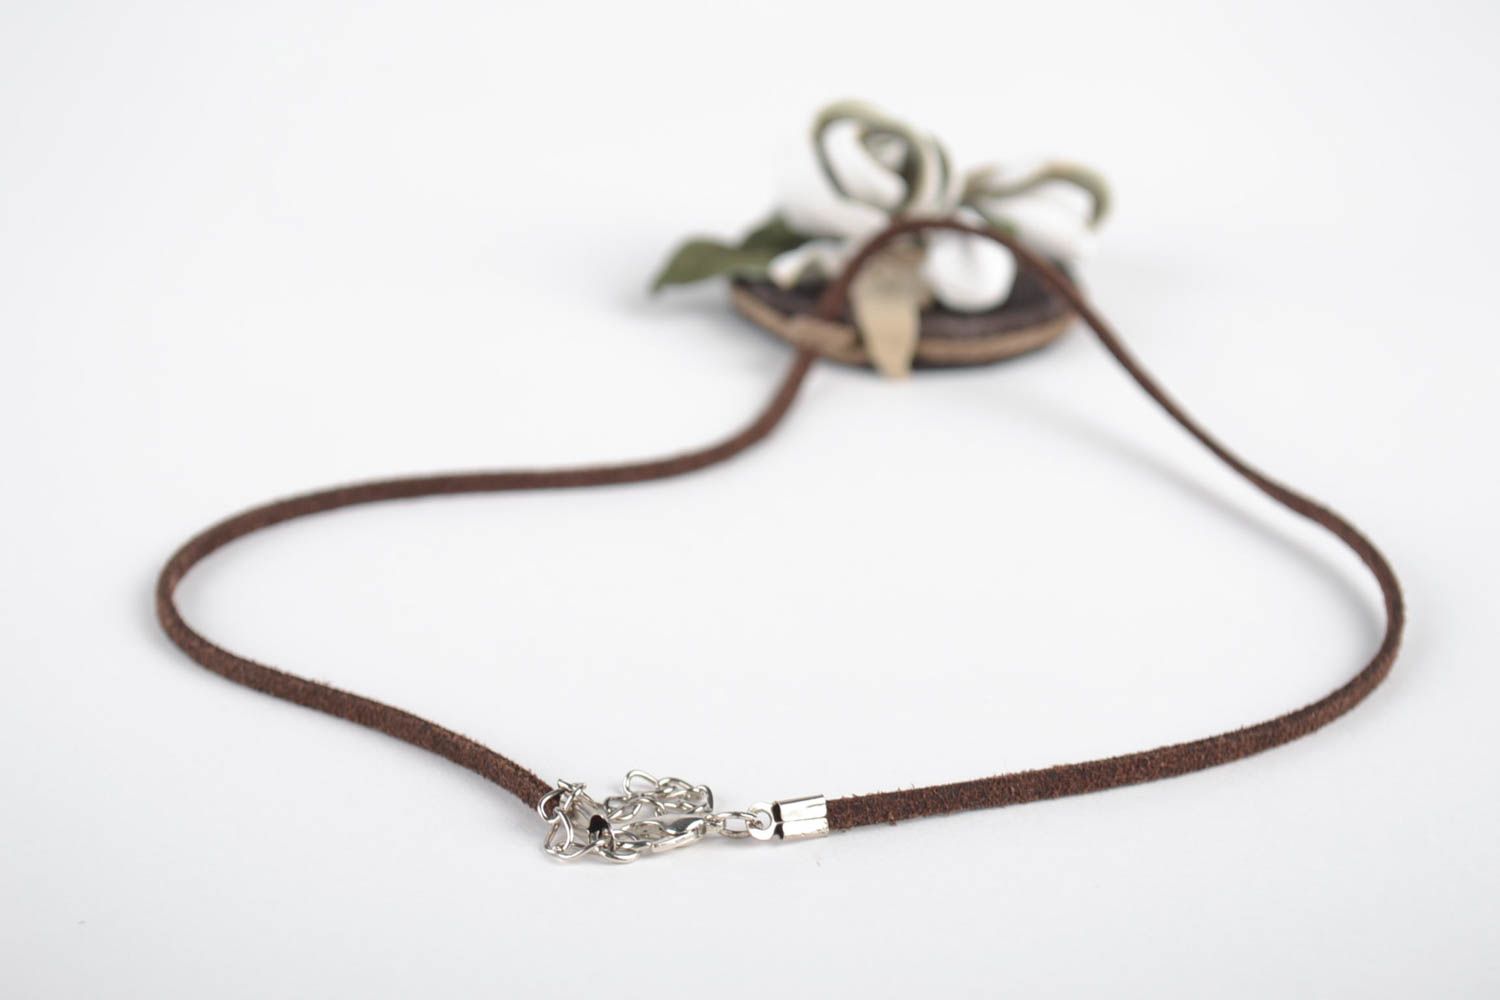 Handmade pendant leather pendant designer pendant beautiful jewelry gift ideas photo 3